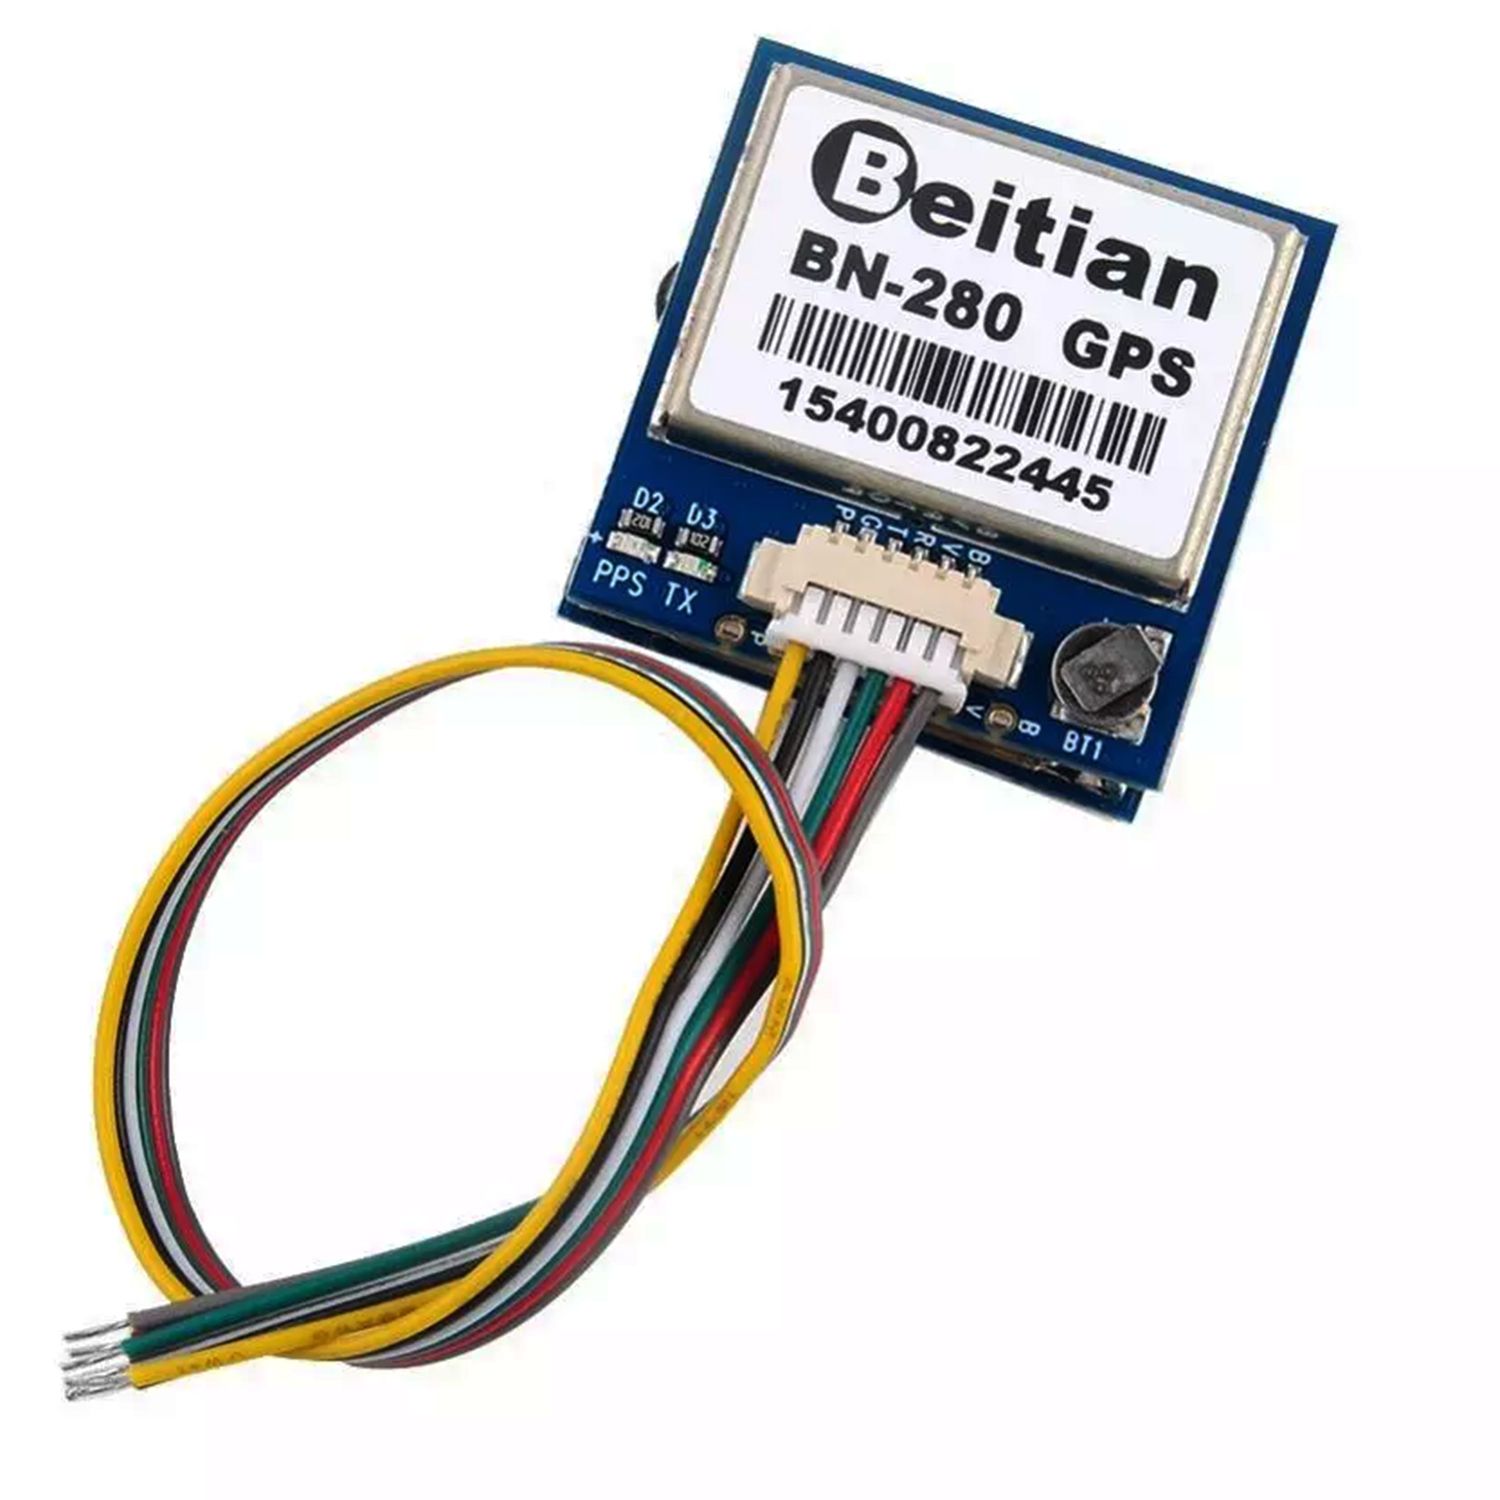 Основне фото Модуль Ublox GPS Beitian BN-280D з компасом в інтернет - магазині RoboStore Arduino